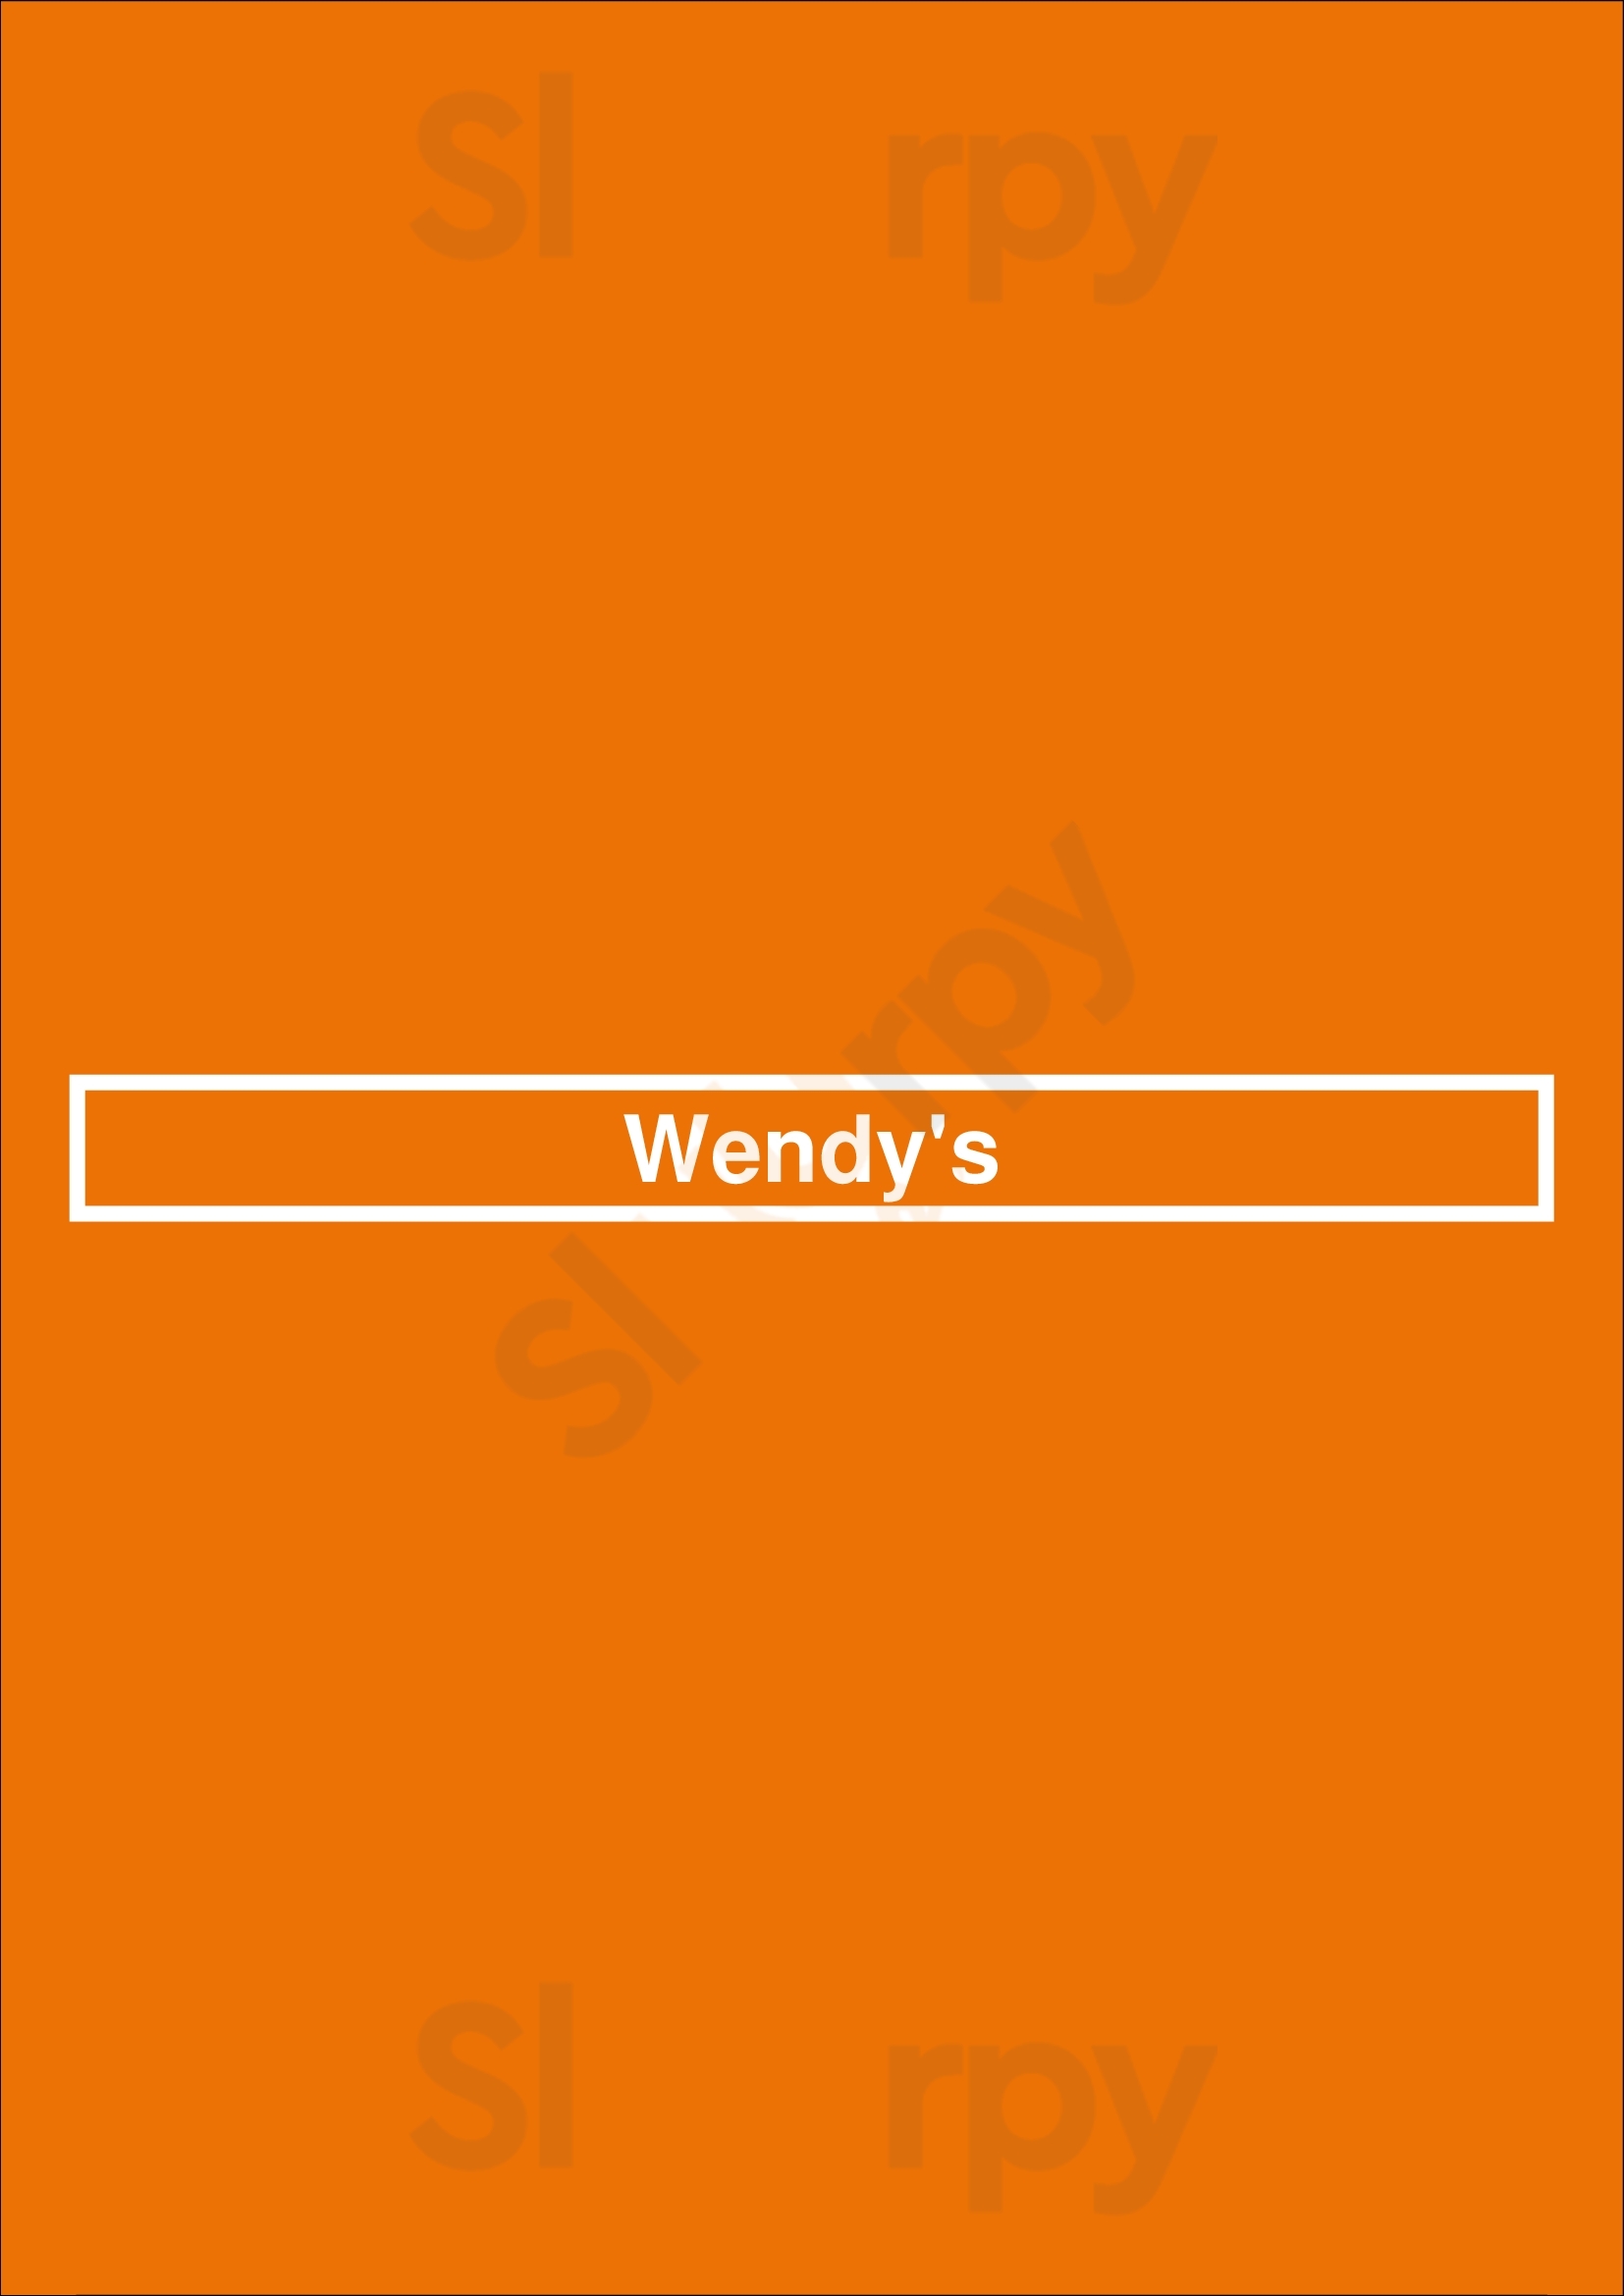 Wendy's Philadelphia Menu - 1